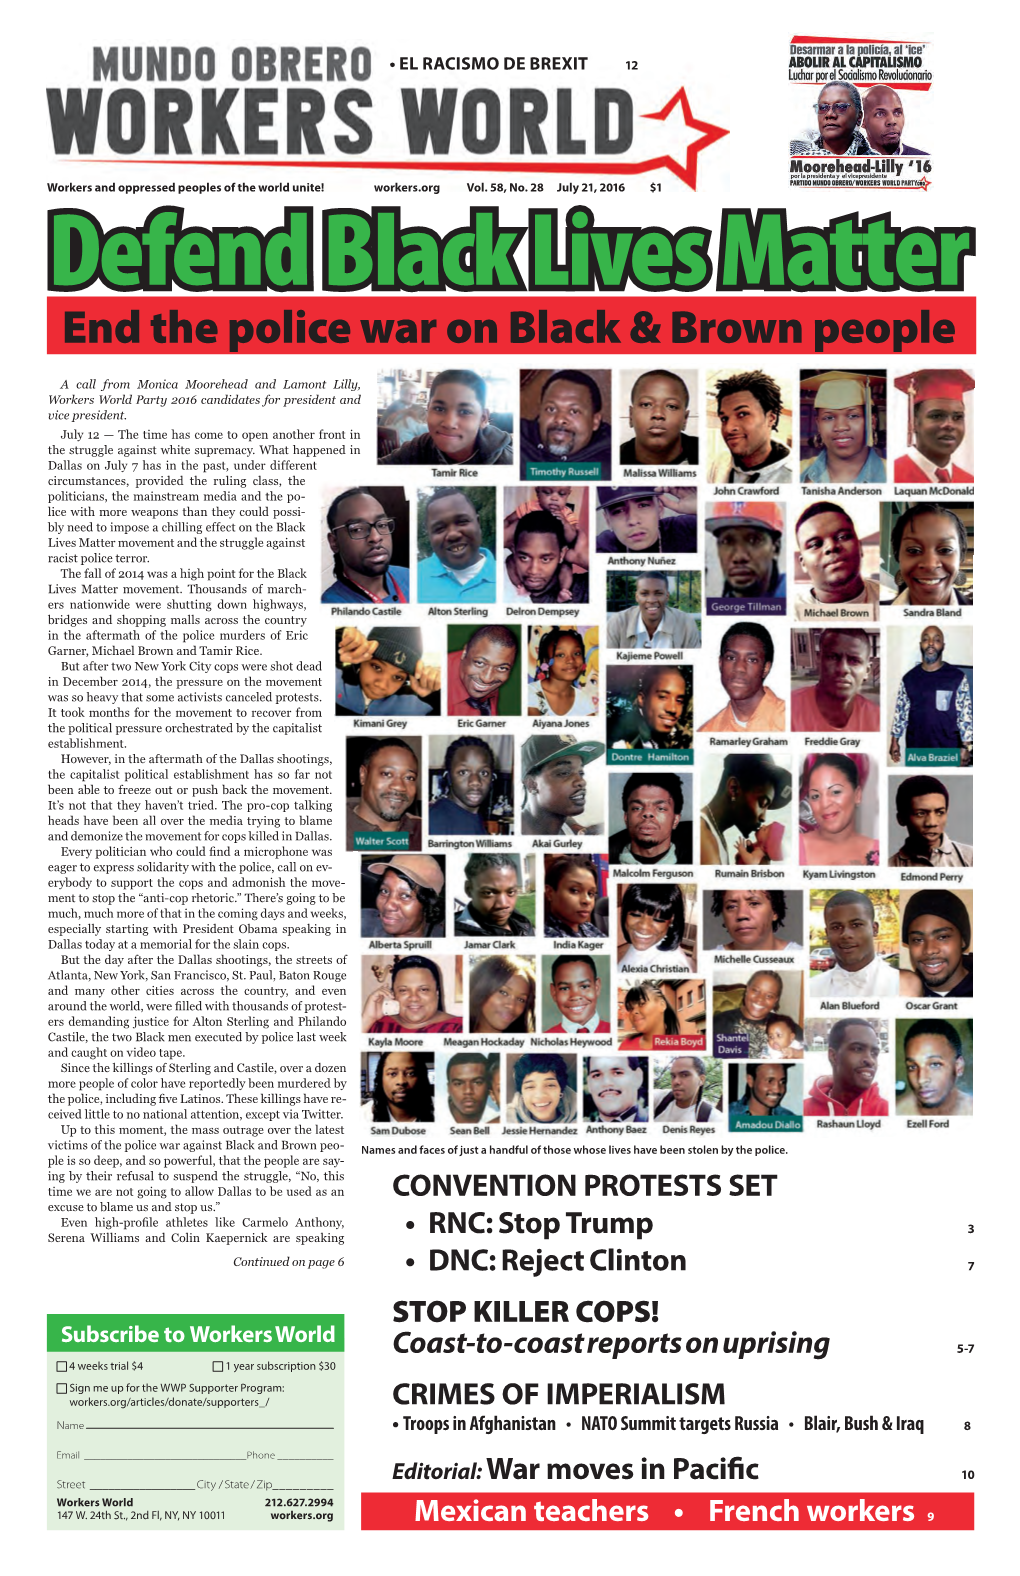 End the Police War on Black & Brown People